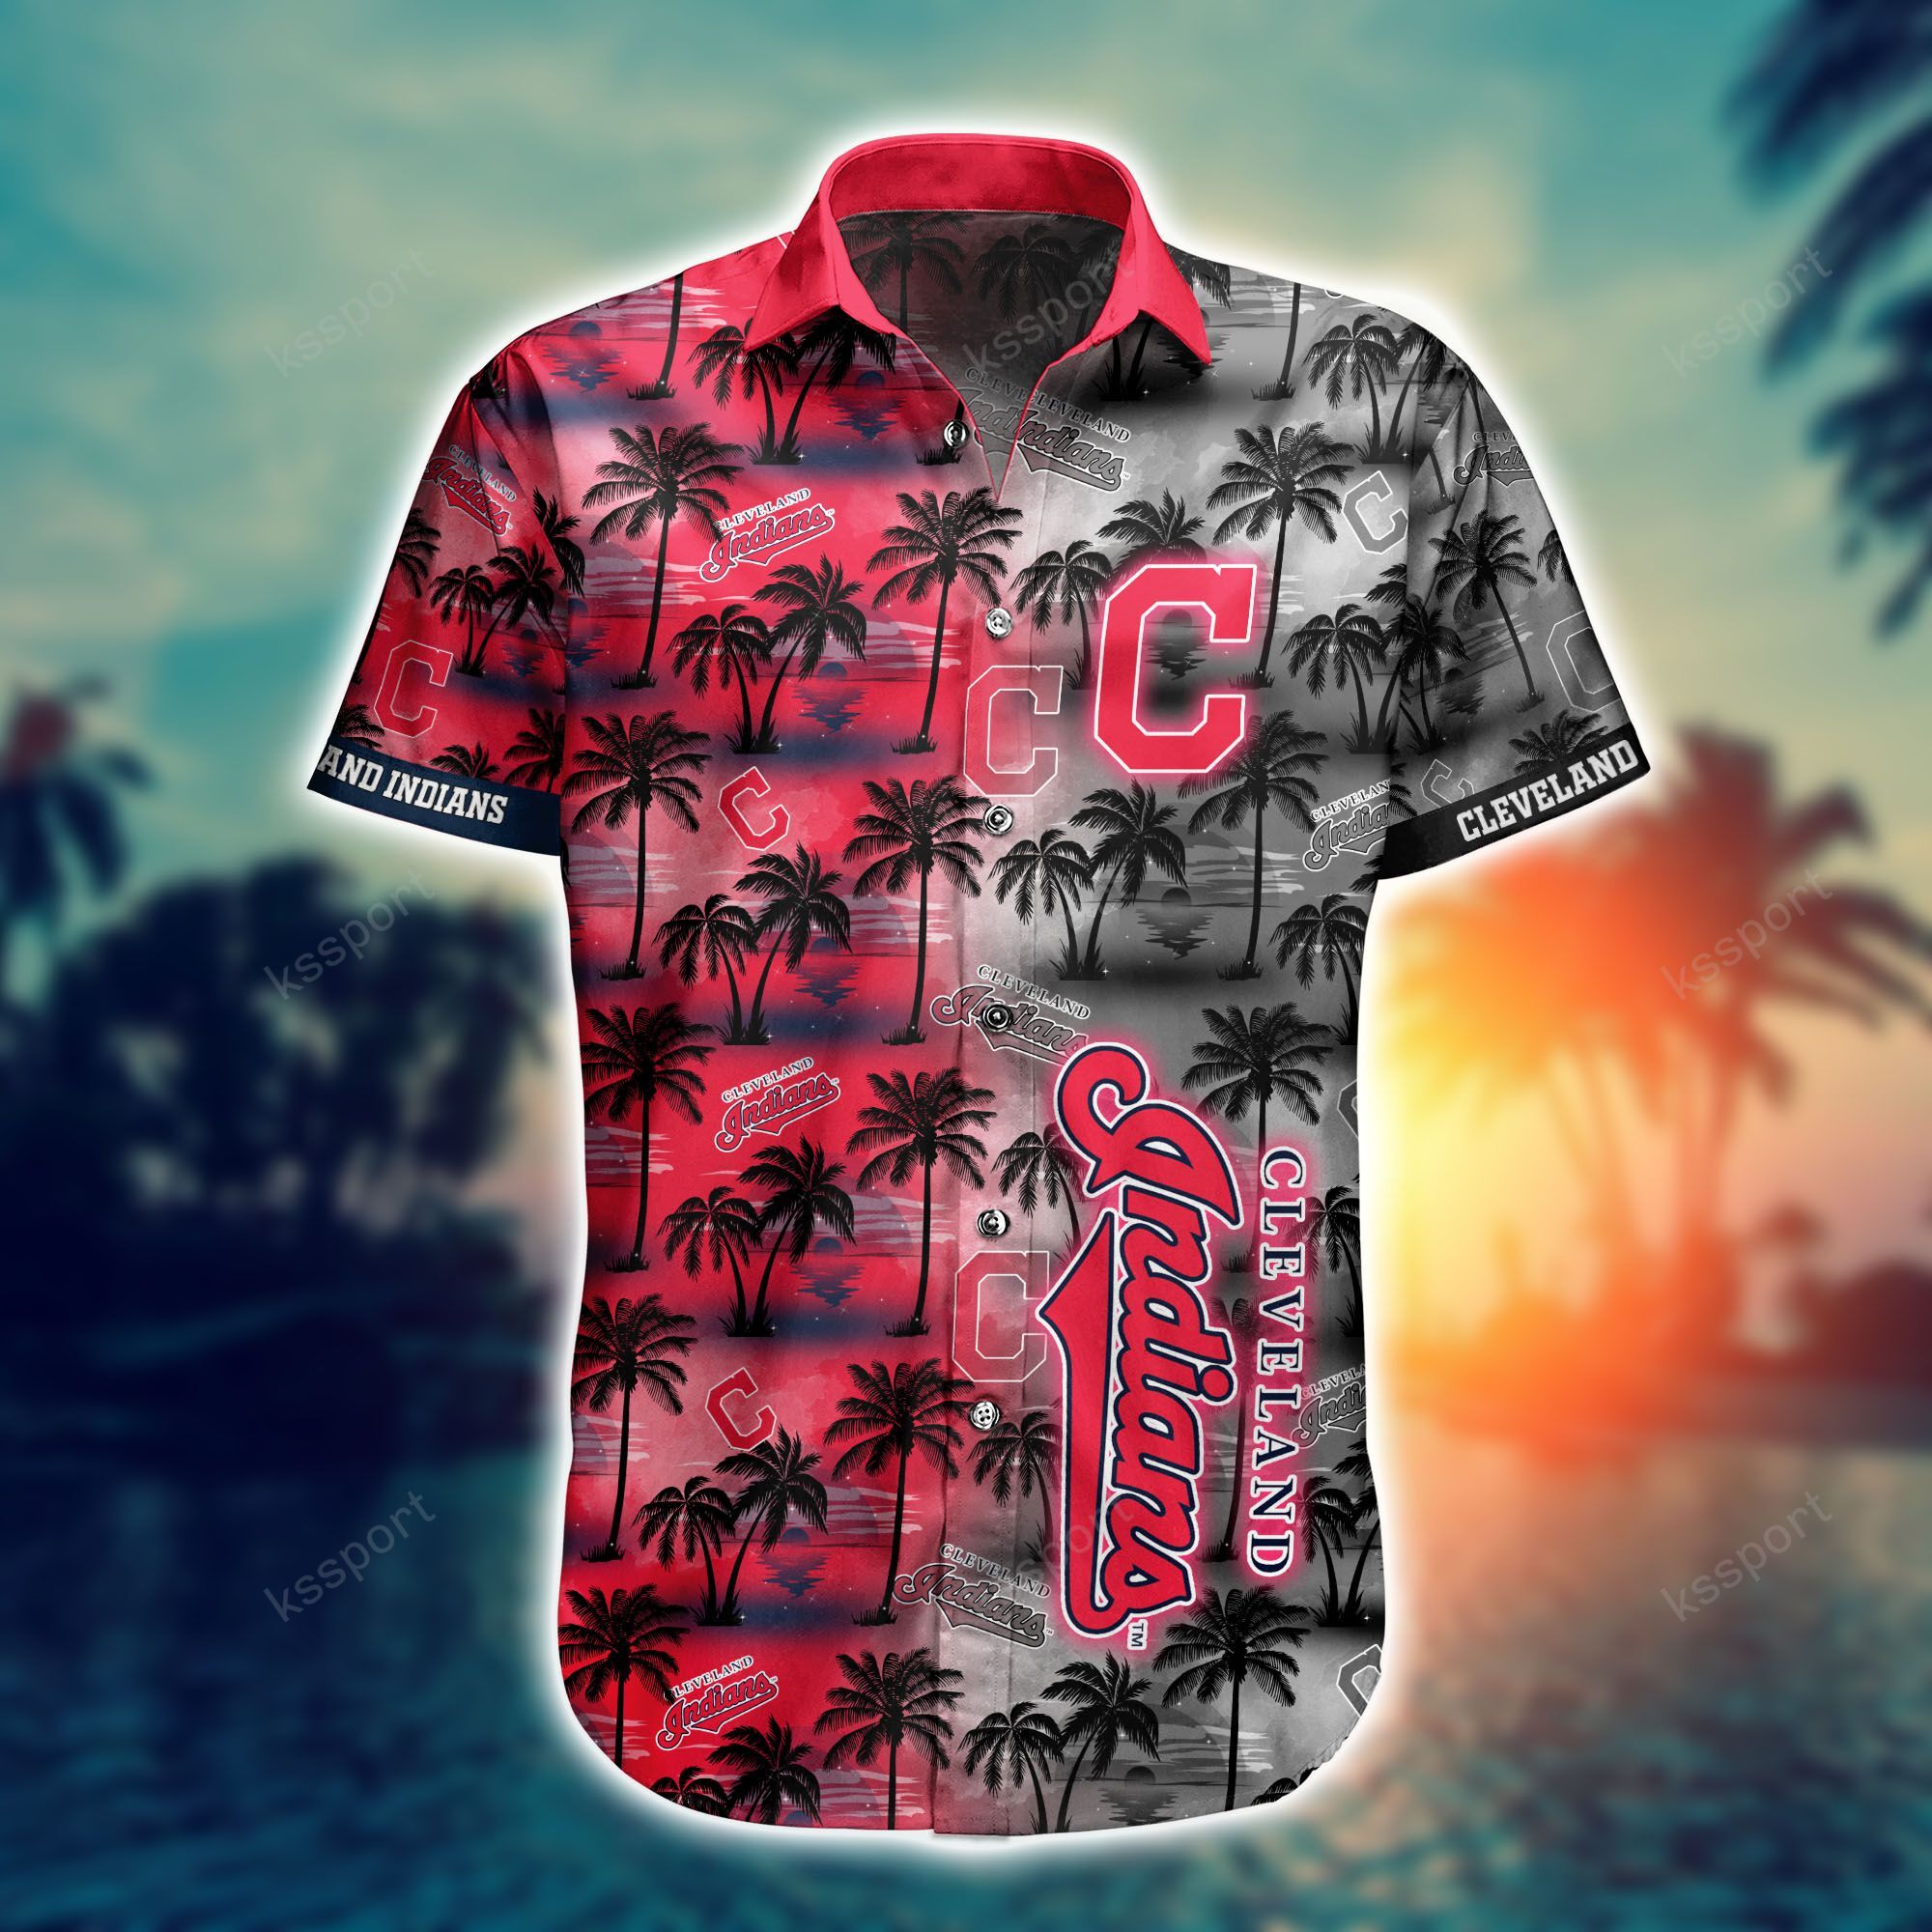 Hawaiian shirt and shorts is a great way to look stylish at a beach party 45